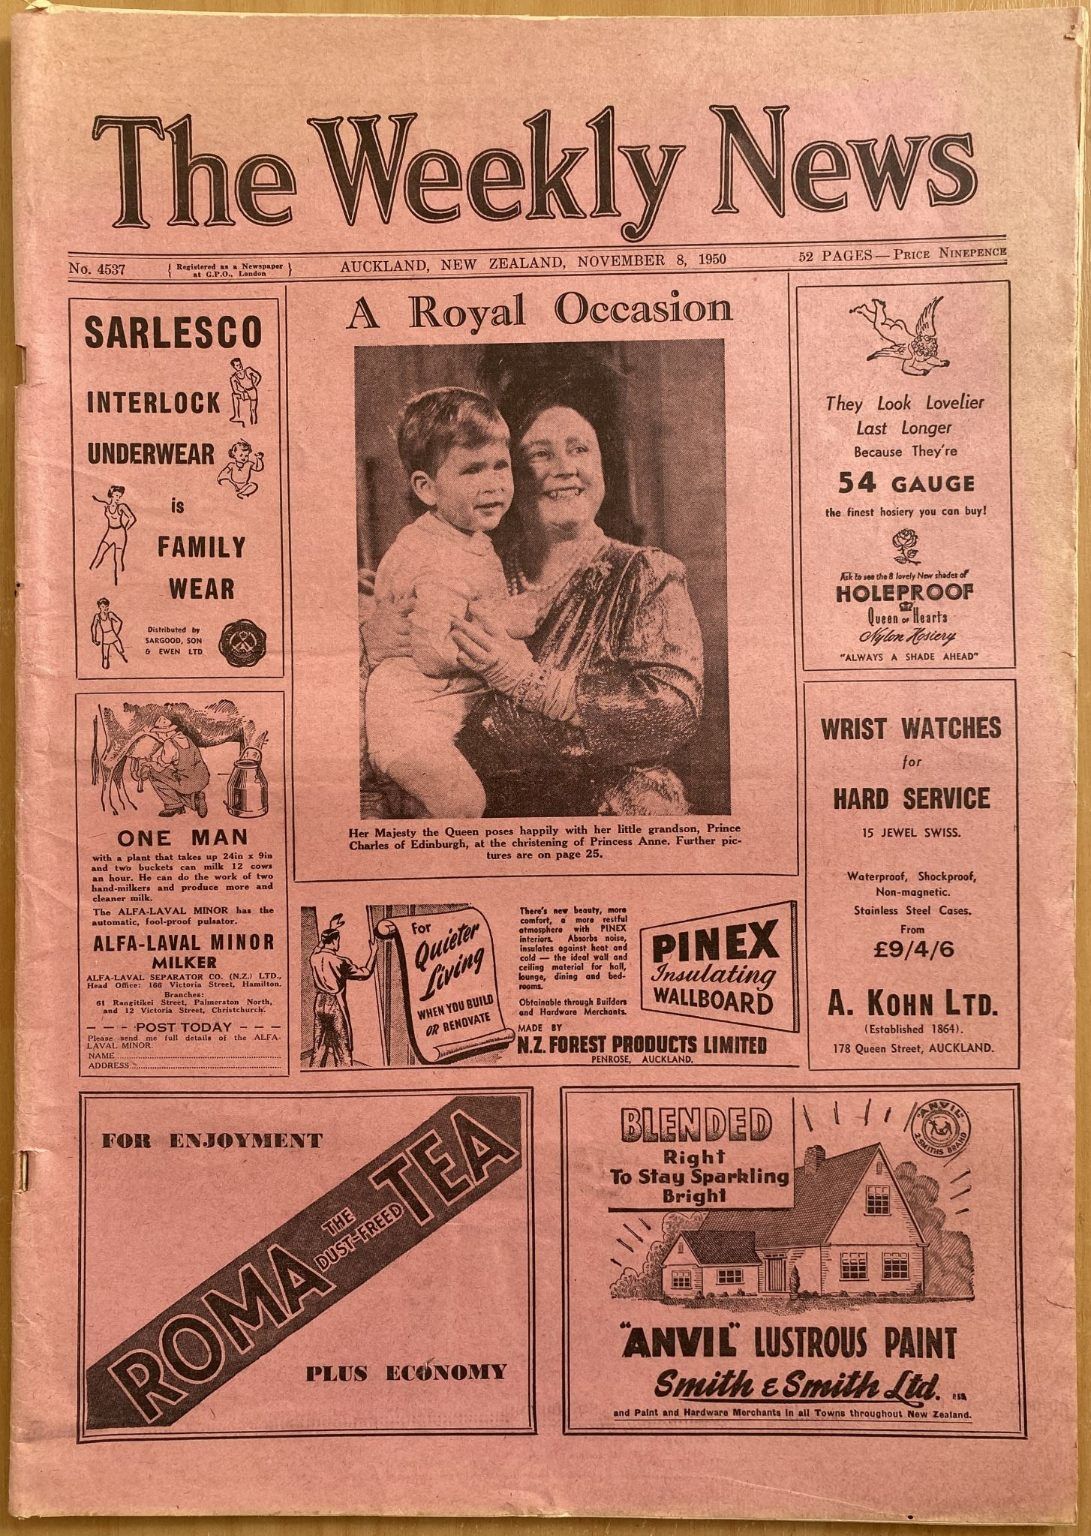 OLD NEWSPAPER: The Weekly News, No. 4537, 8 November 1950